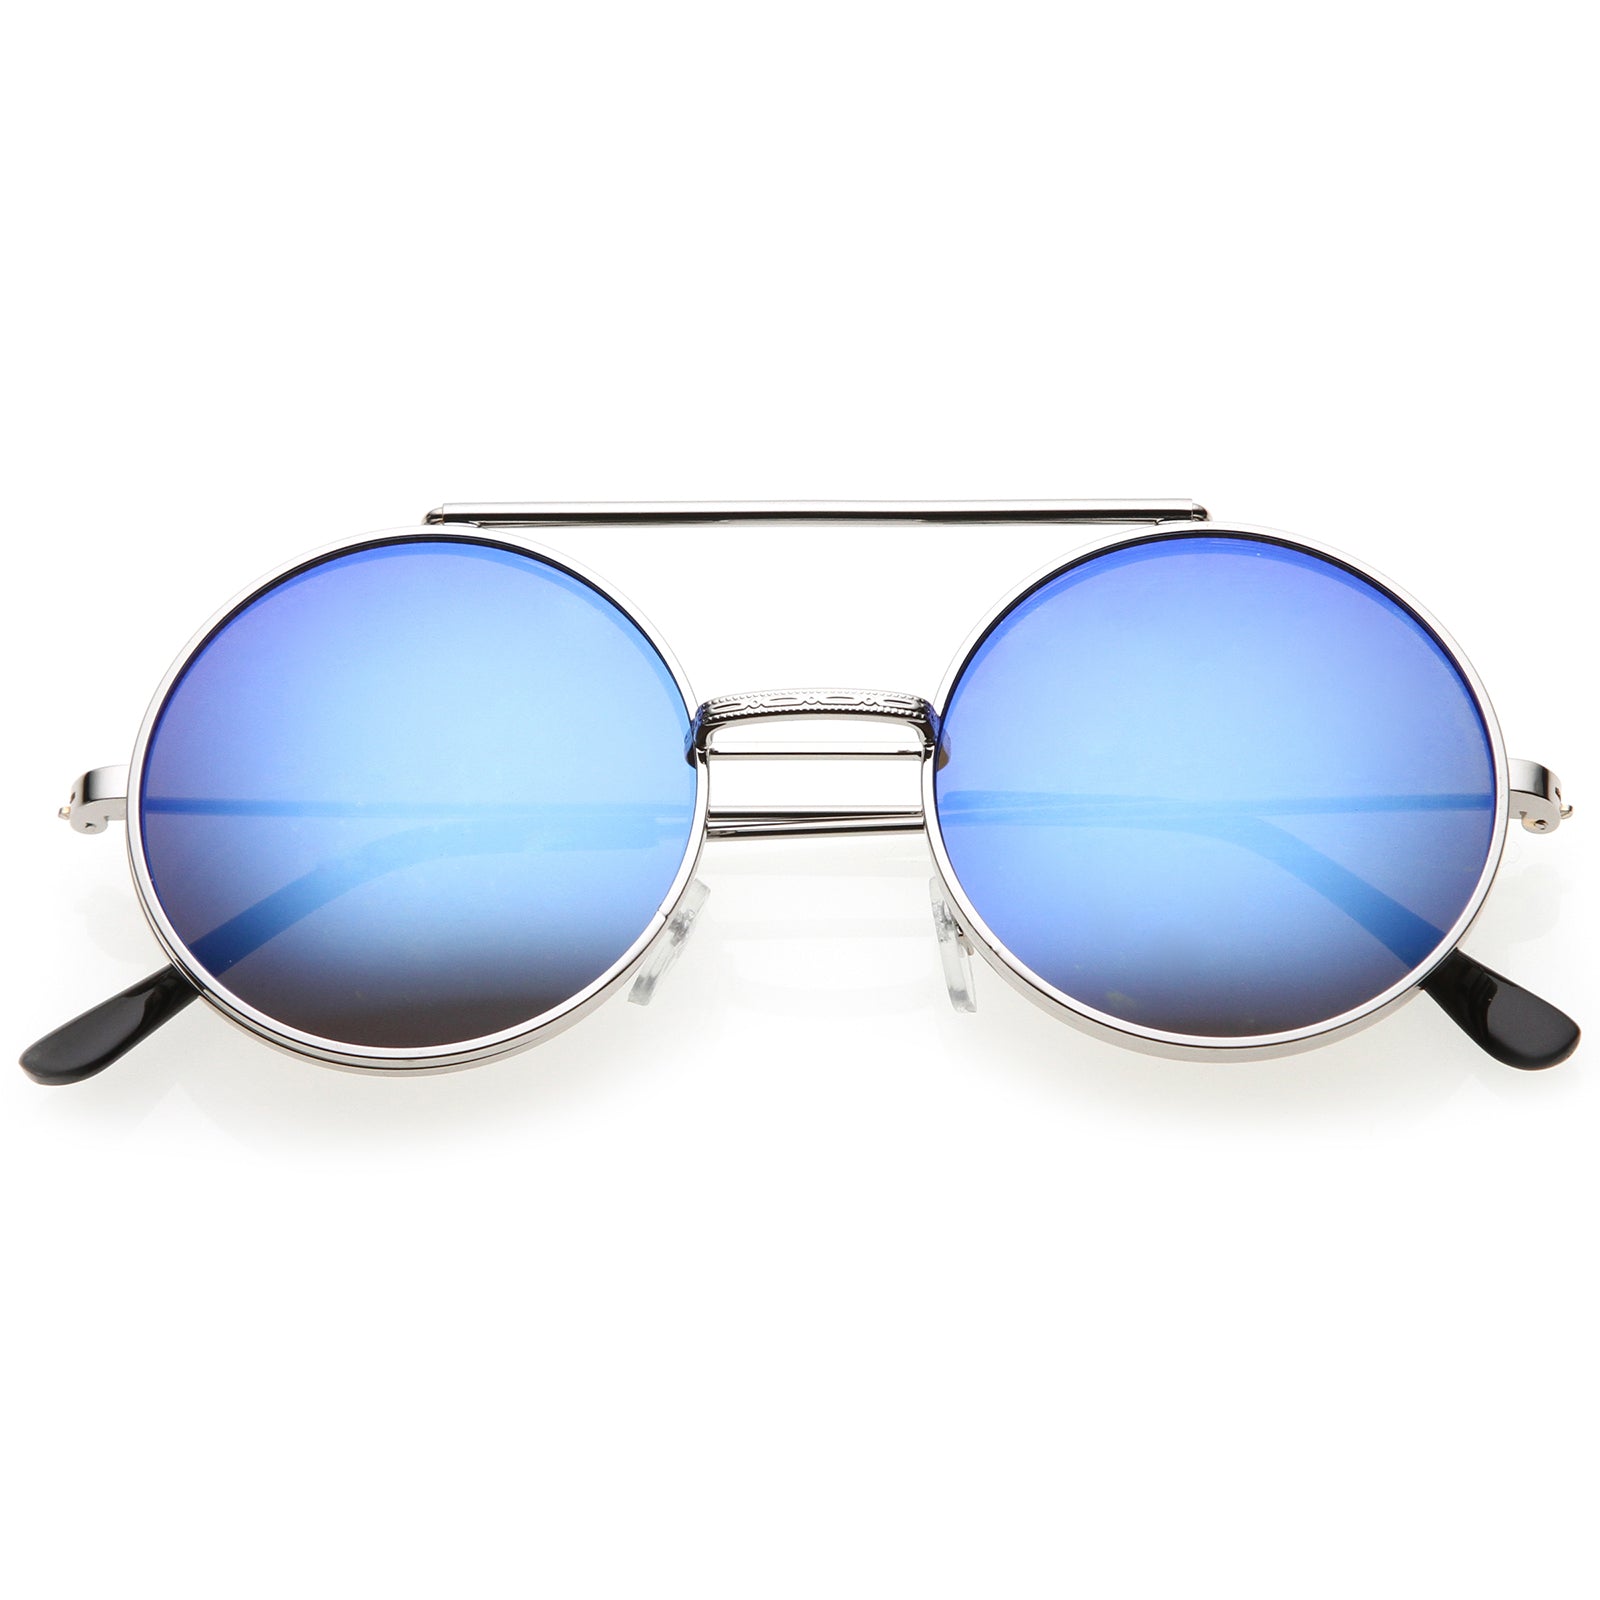 Men's Women's Round Shape Flip up Django Black Sunglasses Clear Blue  Mirrored | eBay